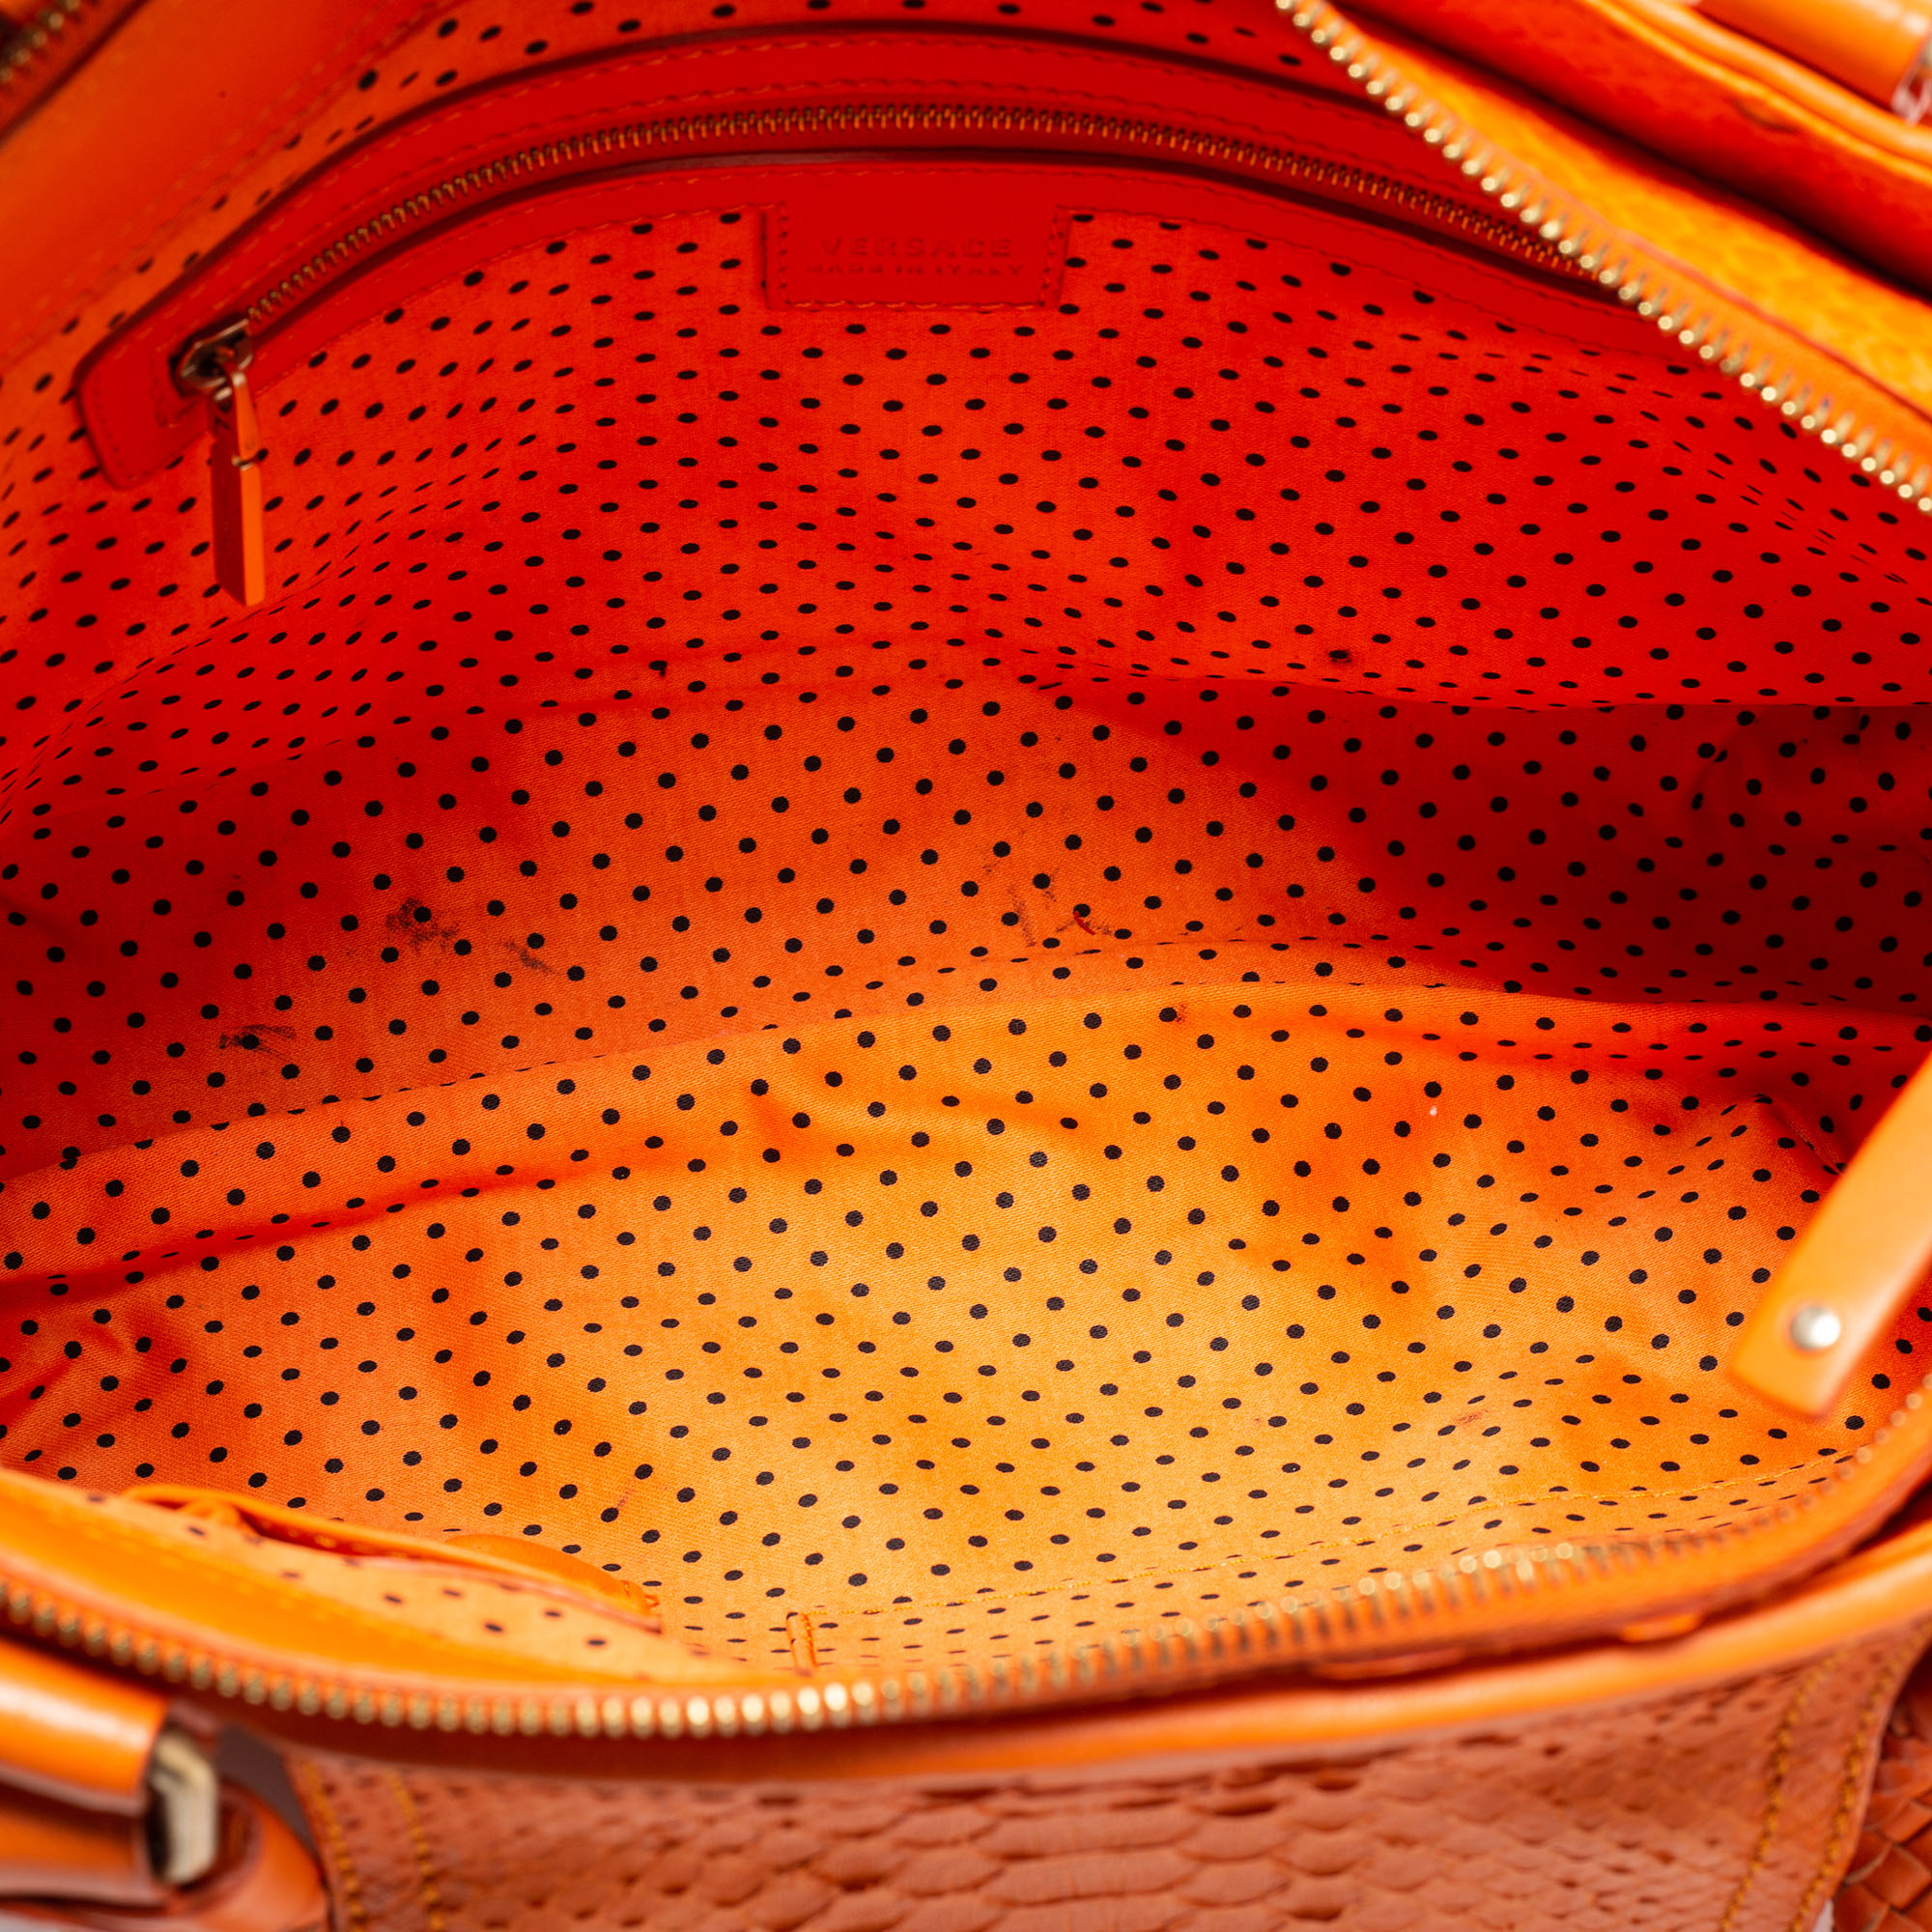 Versace Orange Python And Leather Front Pocket Hobo